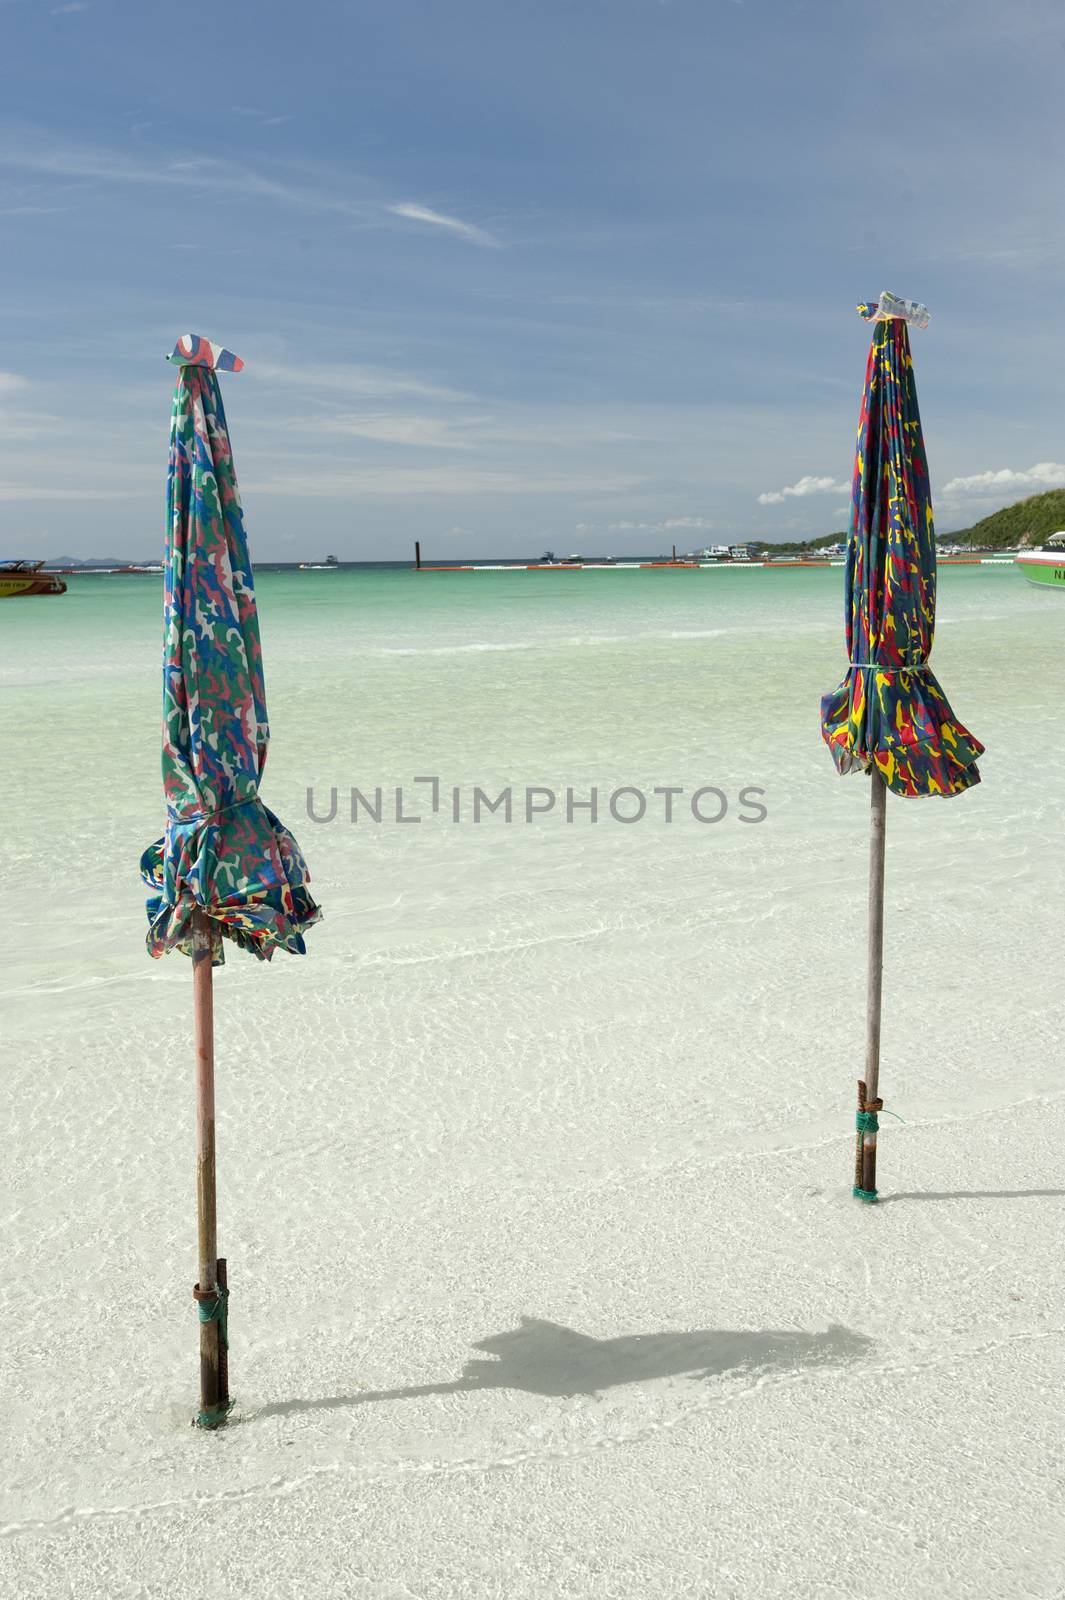 Beach chair and umbrella on the beach , Koh larn , Thailand by think4photop